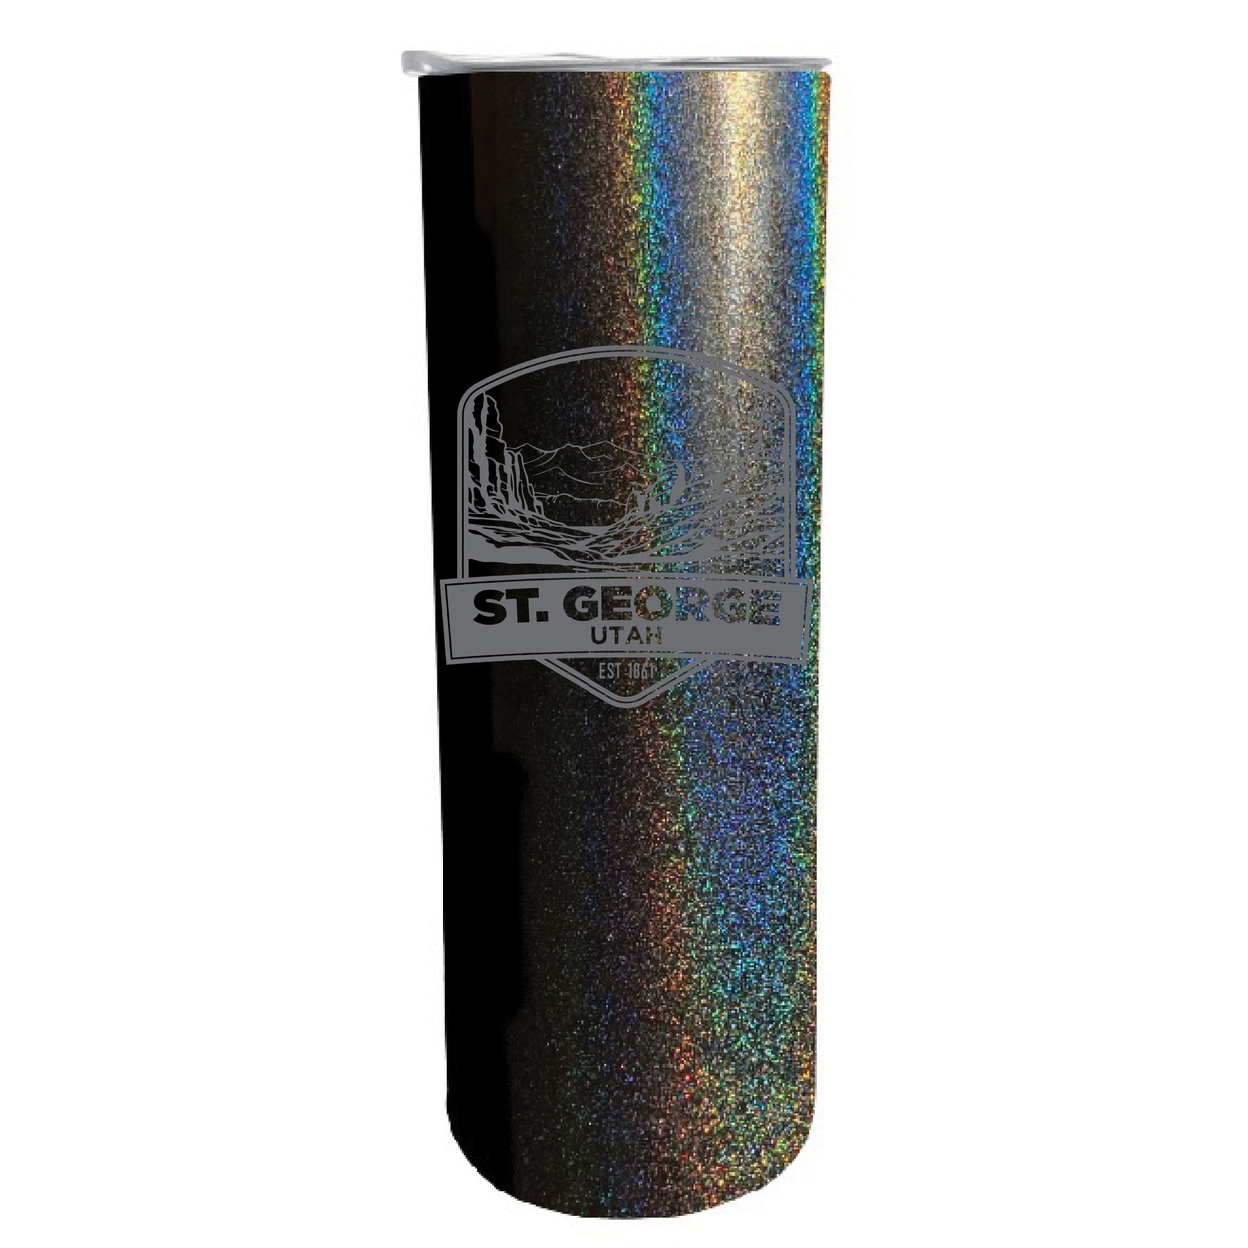 St. George Utah Souvenir 20 Oz Engraved Insulated Stainless Steel Skinny Tumbler - Black Glitter,,Single Unit